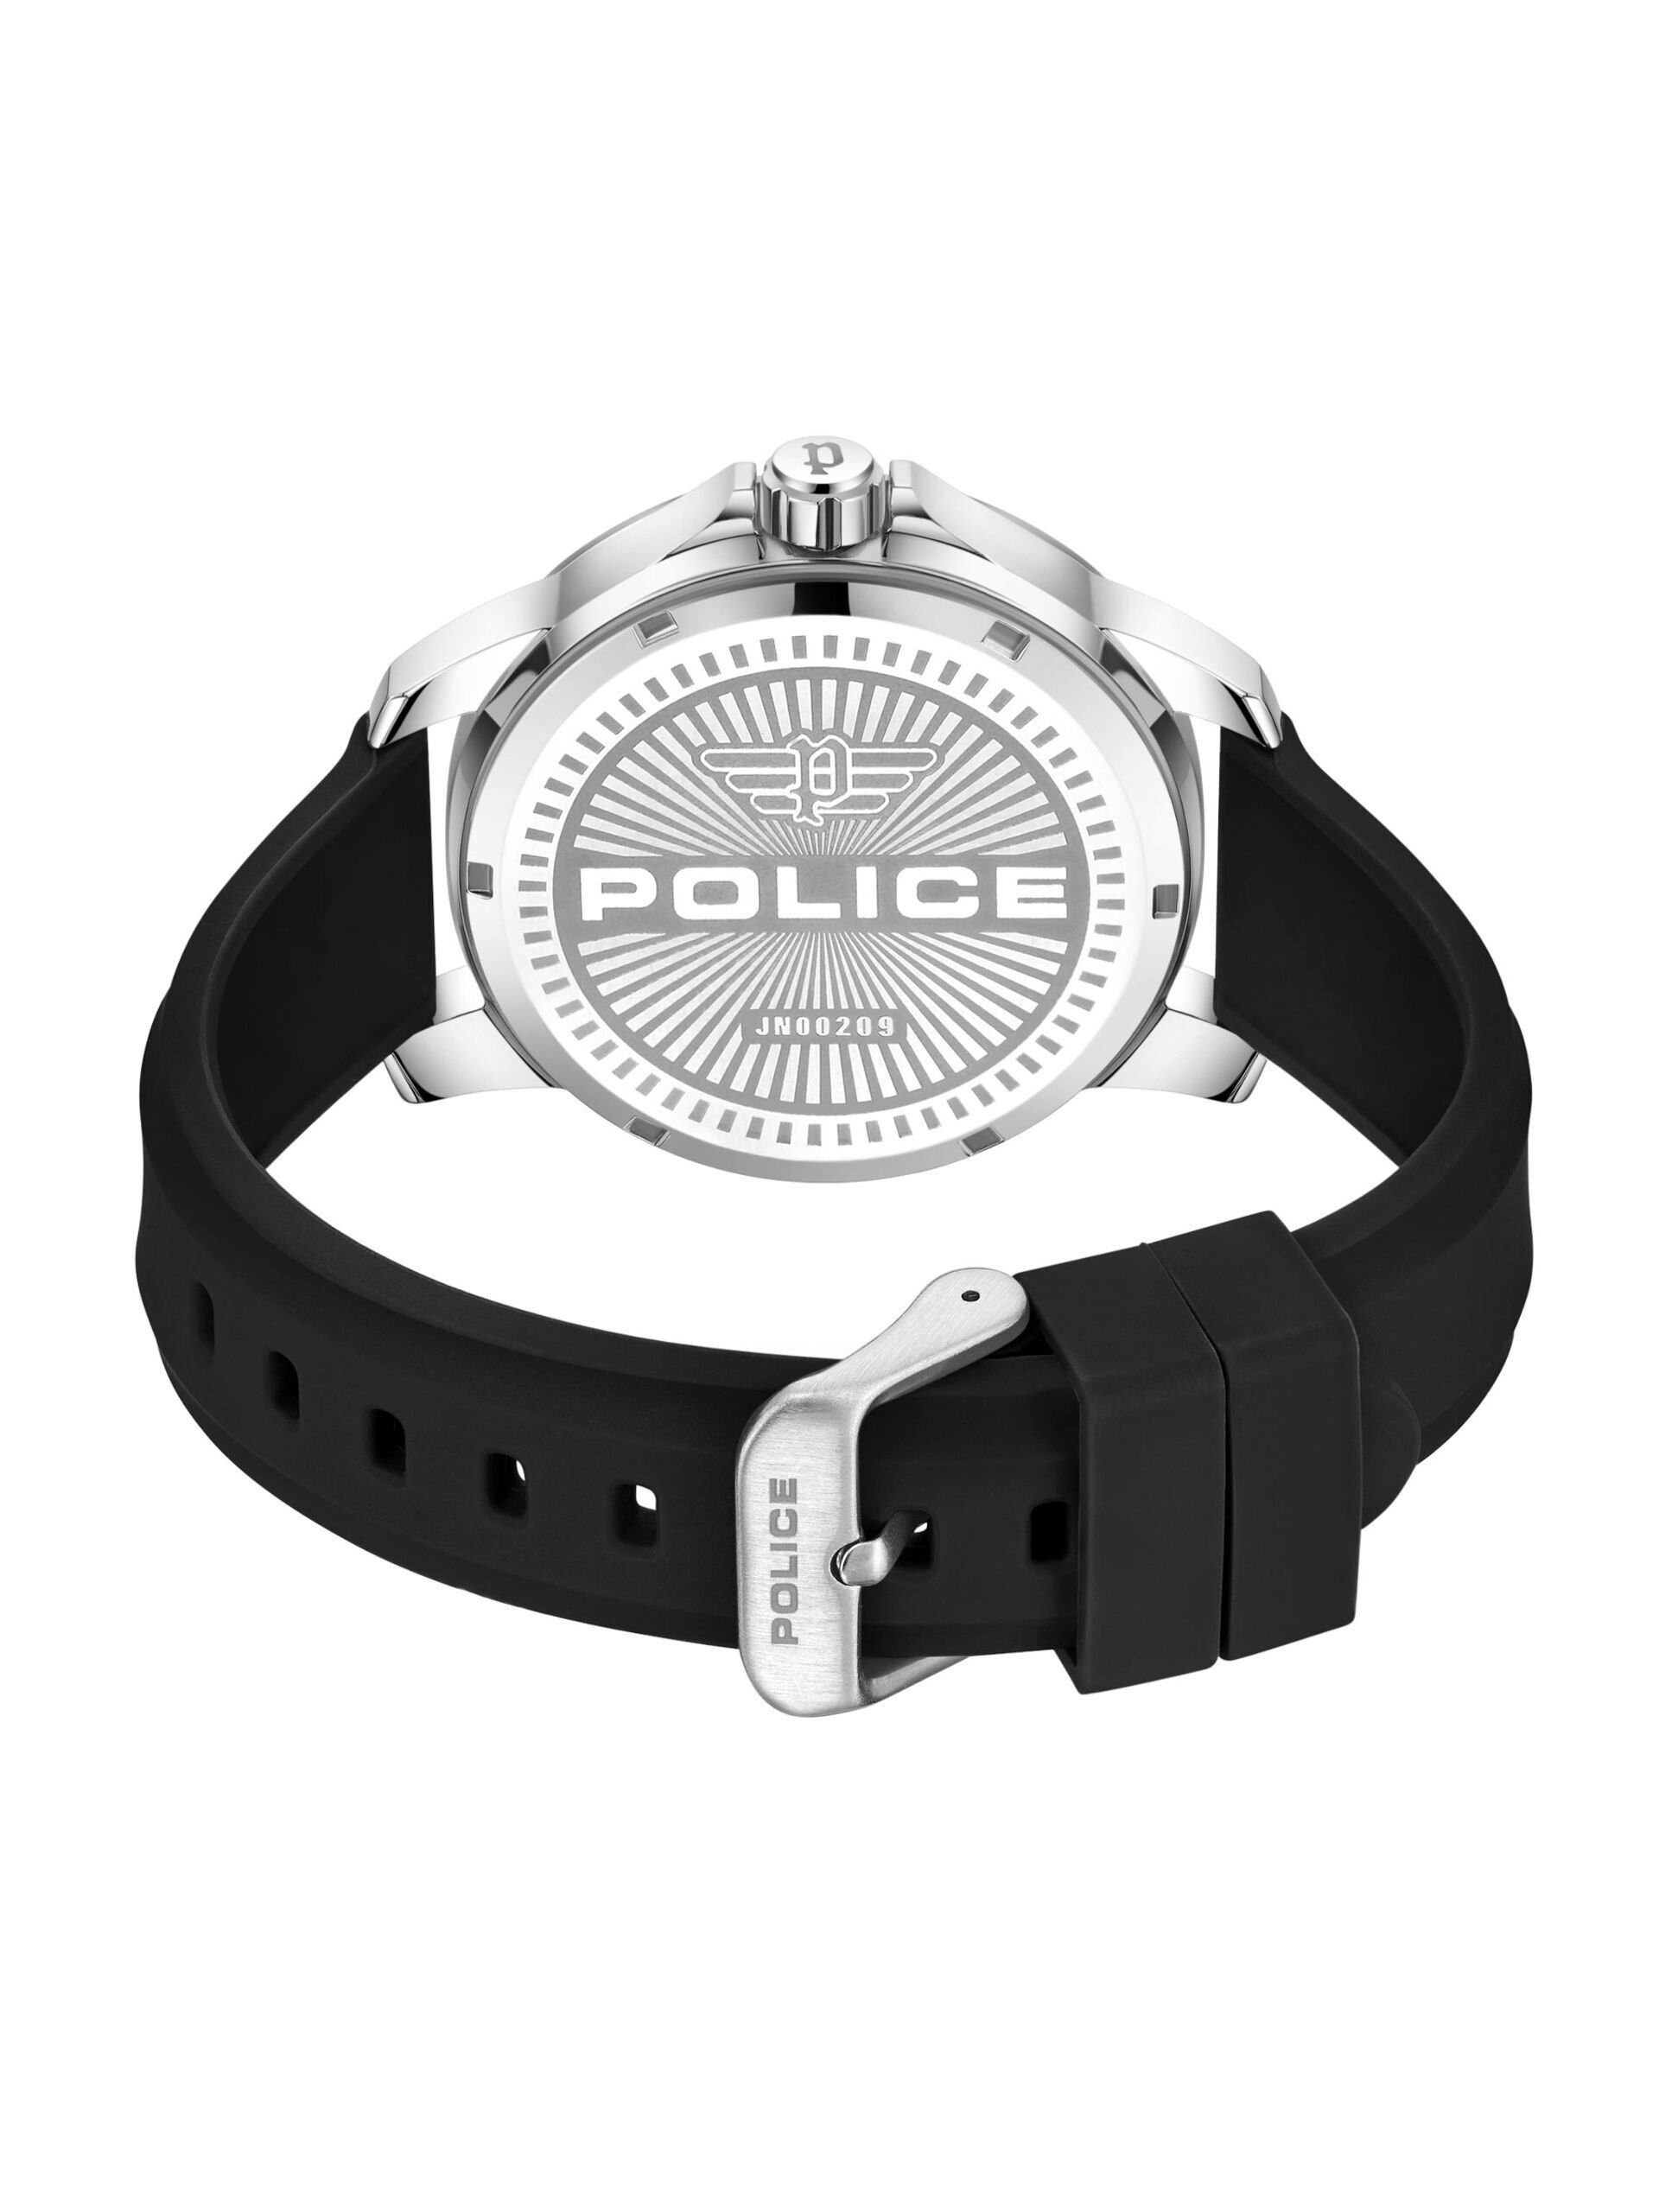 Police Haarband MENSOR, mit hochwertigem Silber Silikon-Armband